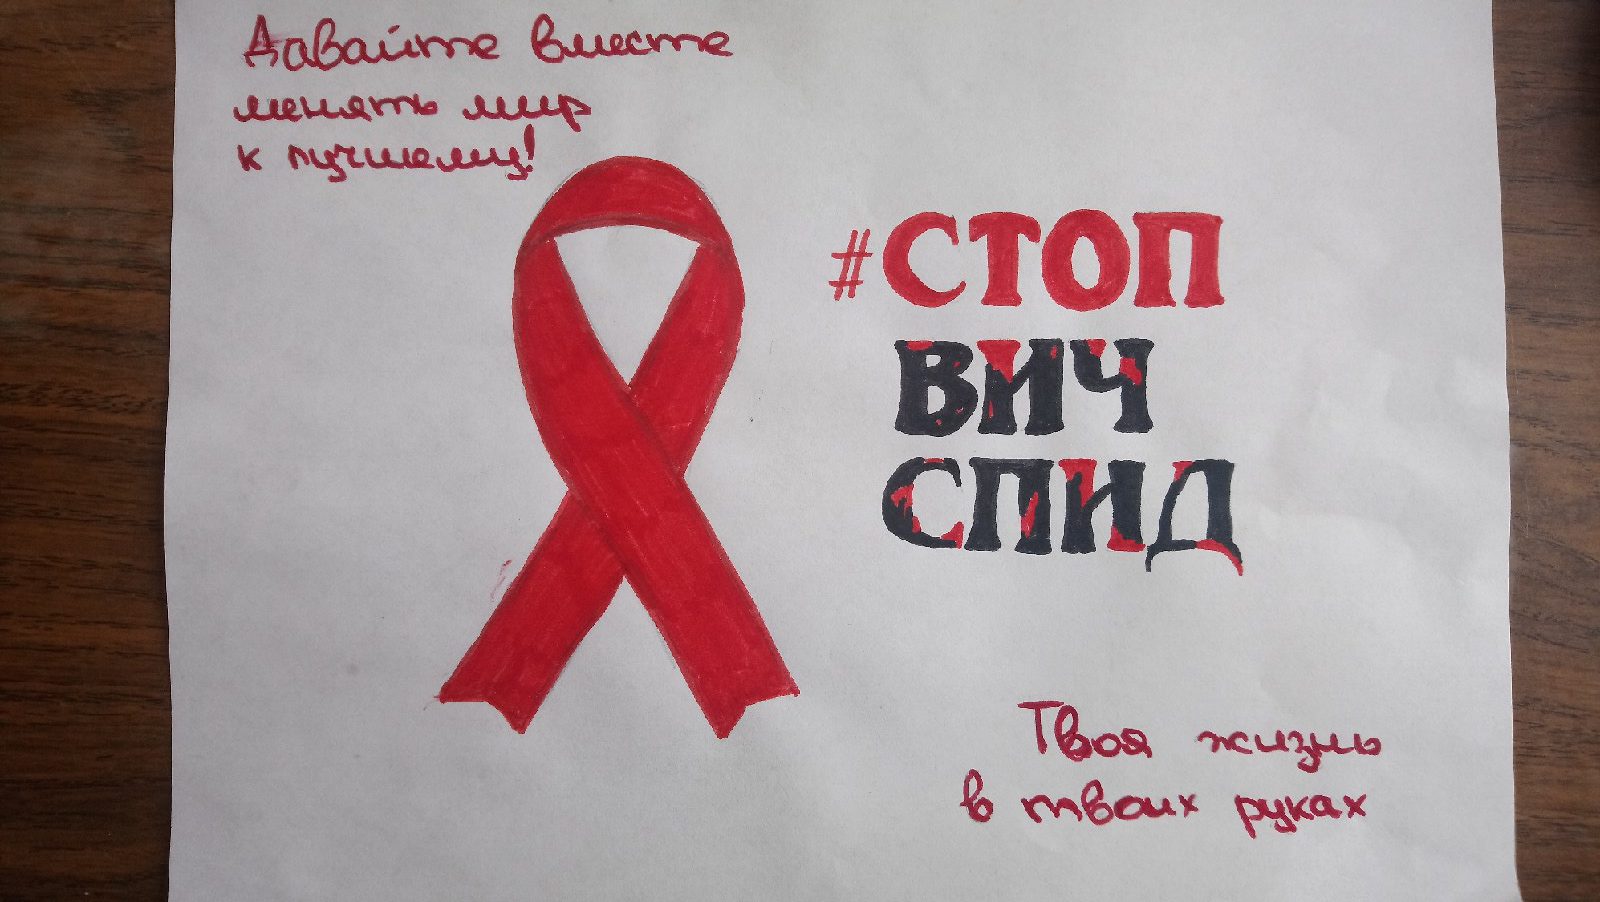 Стоп СПИД плакат